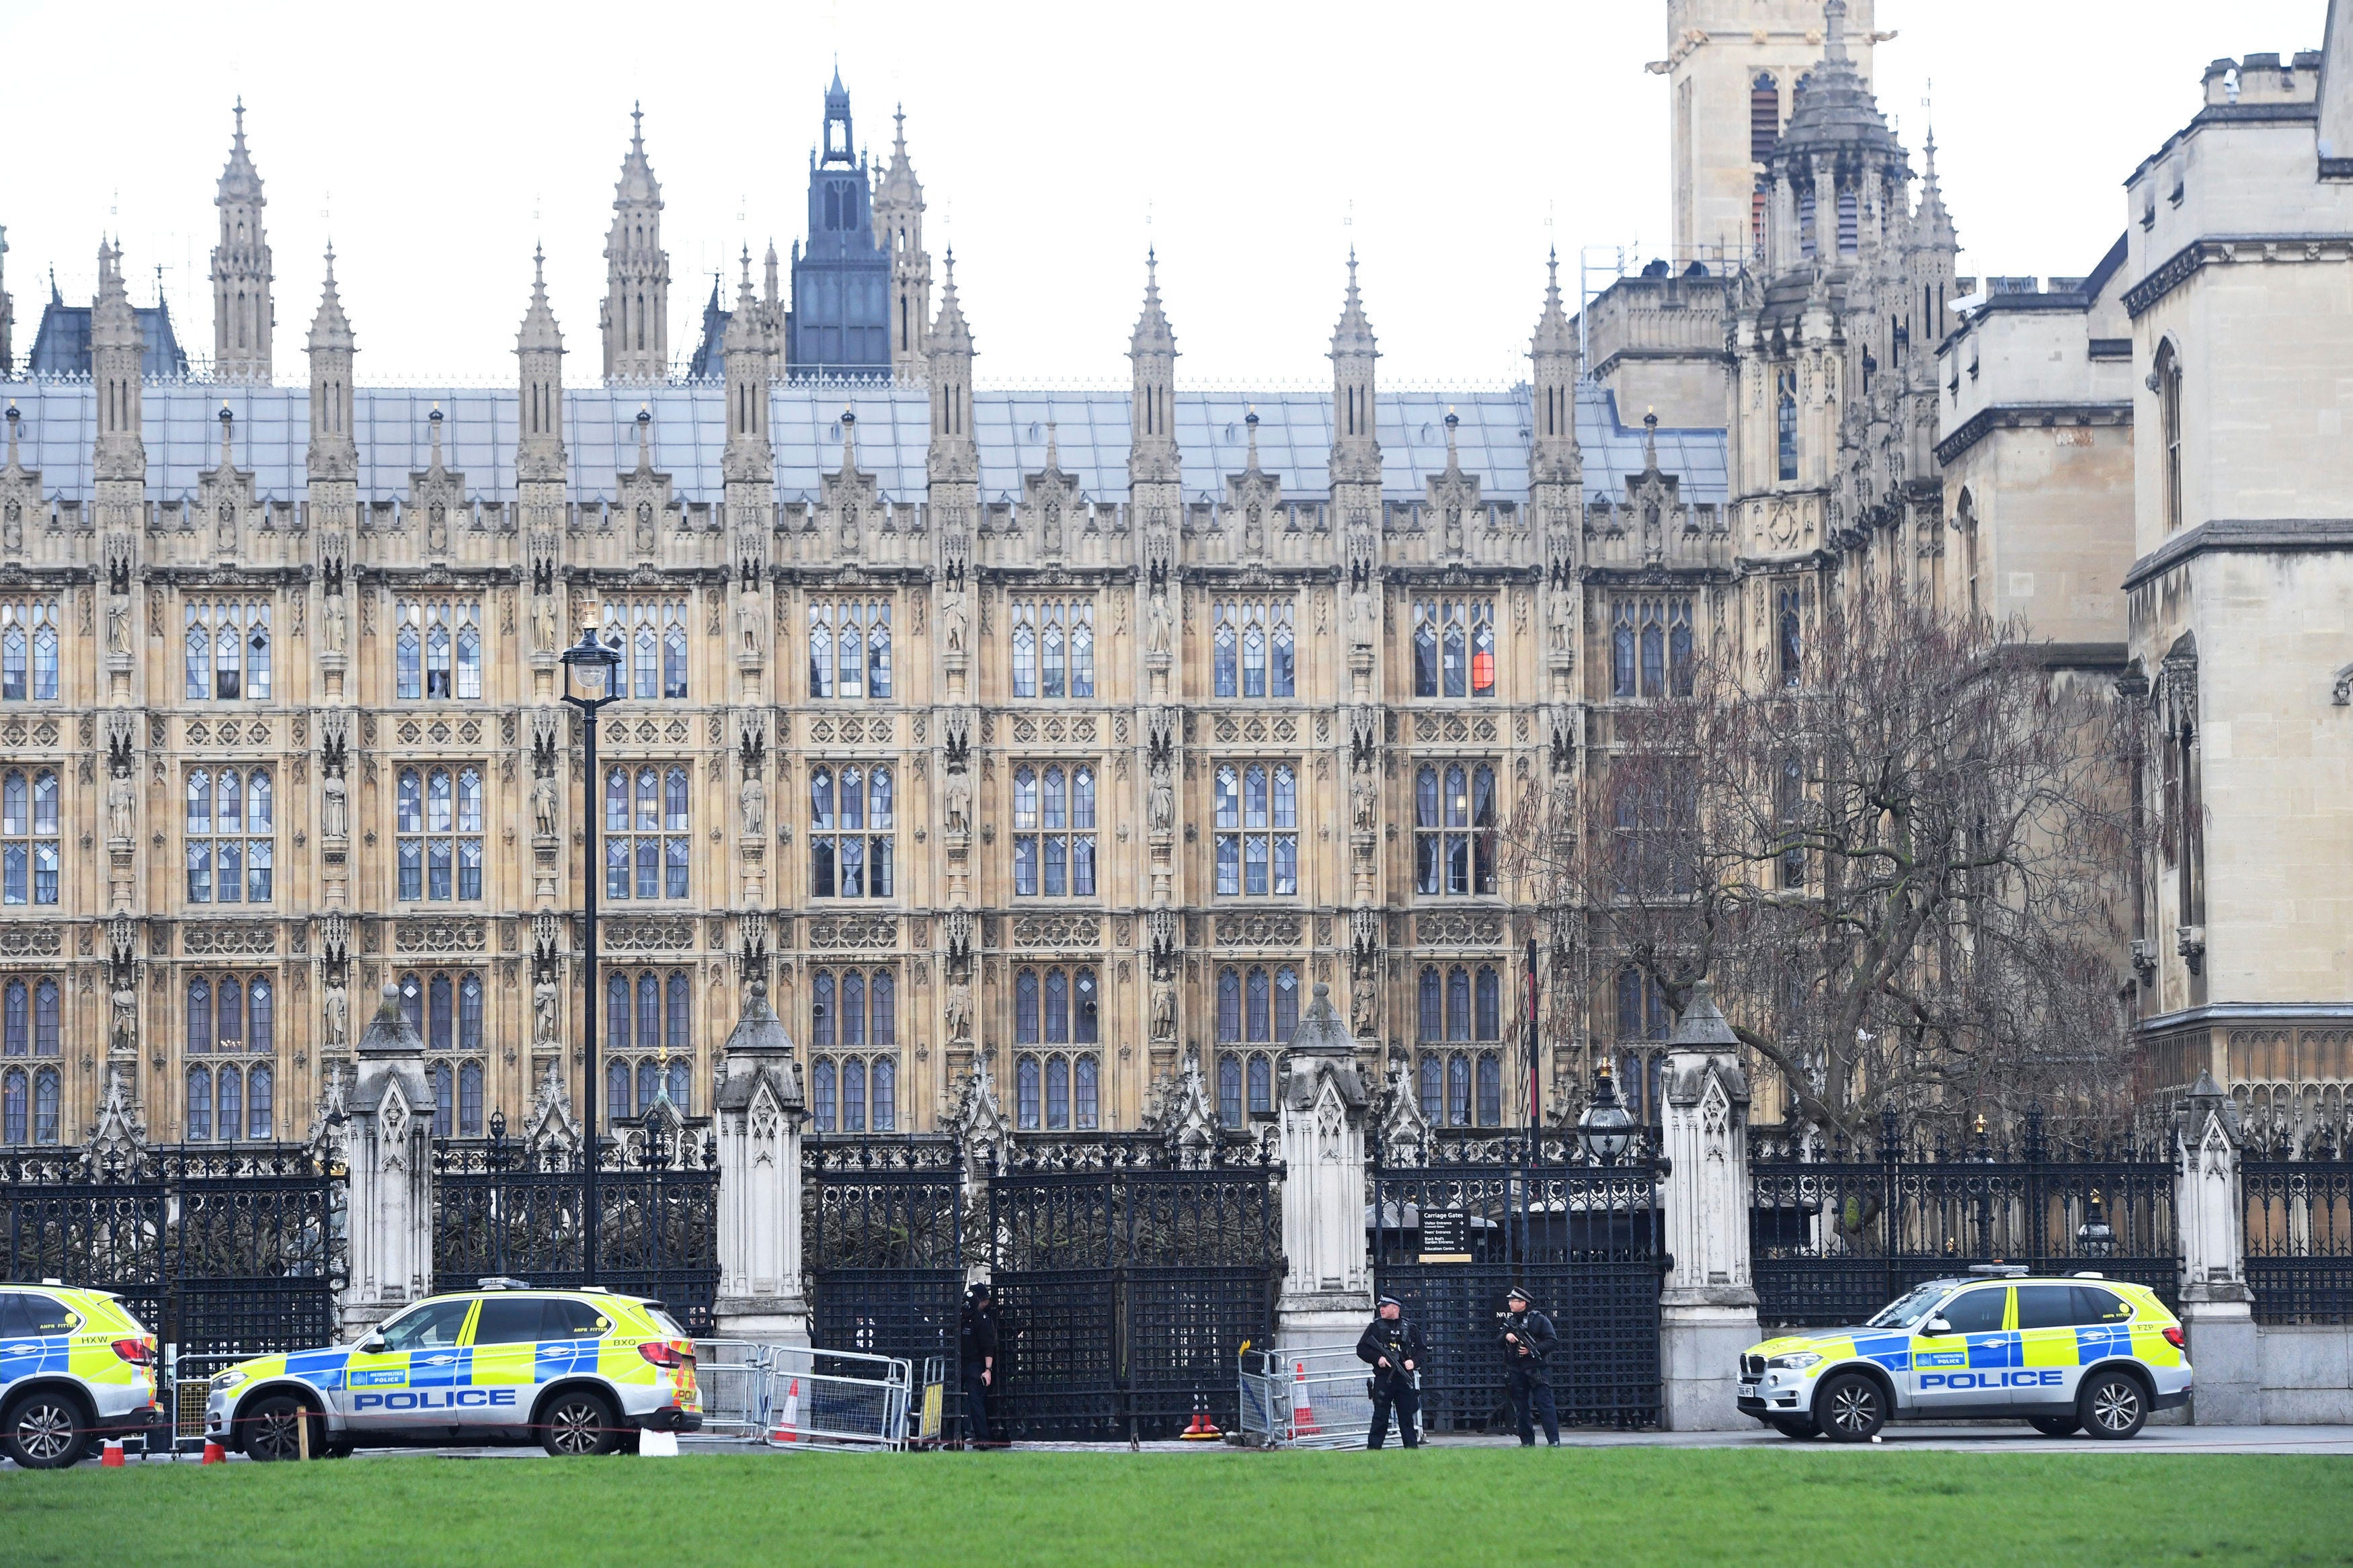 London terror attacker kills 3, injures at least 20, police say